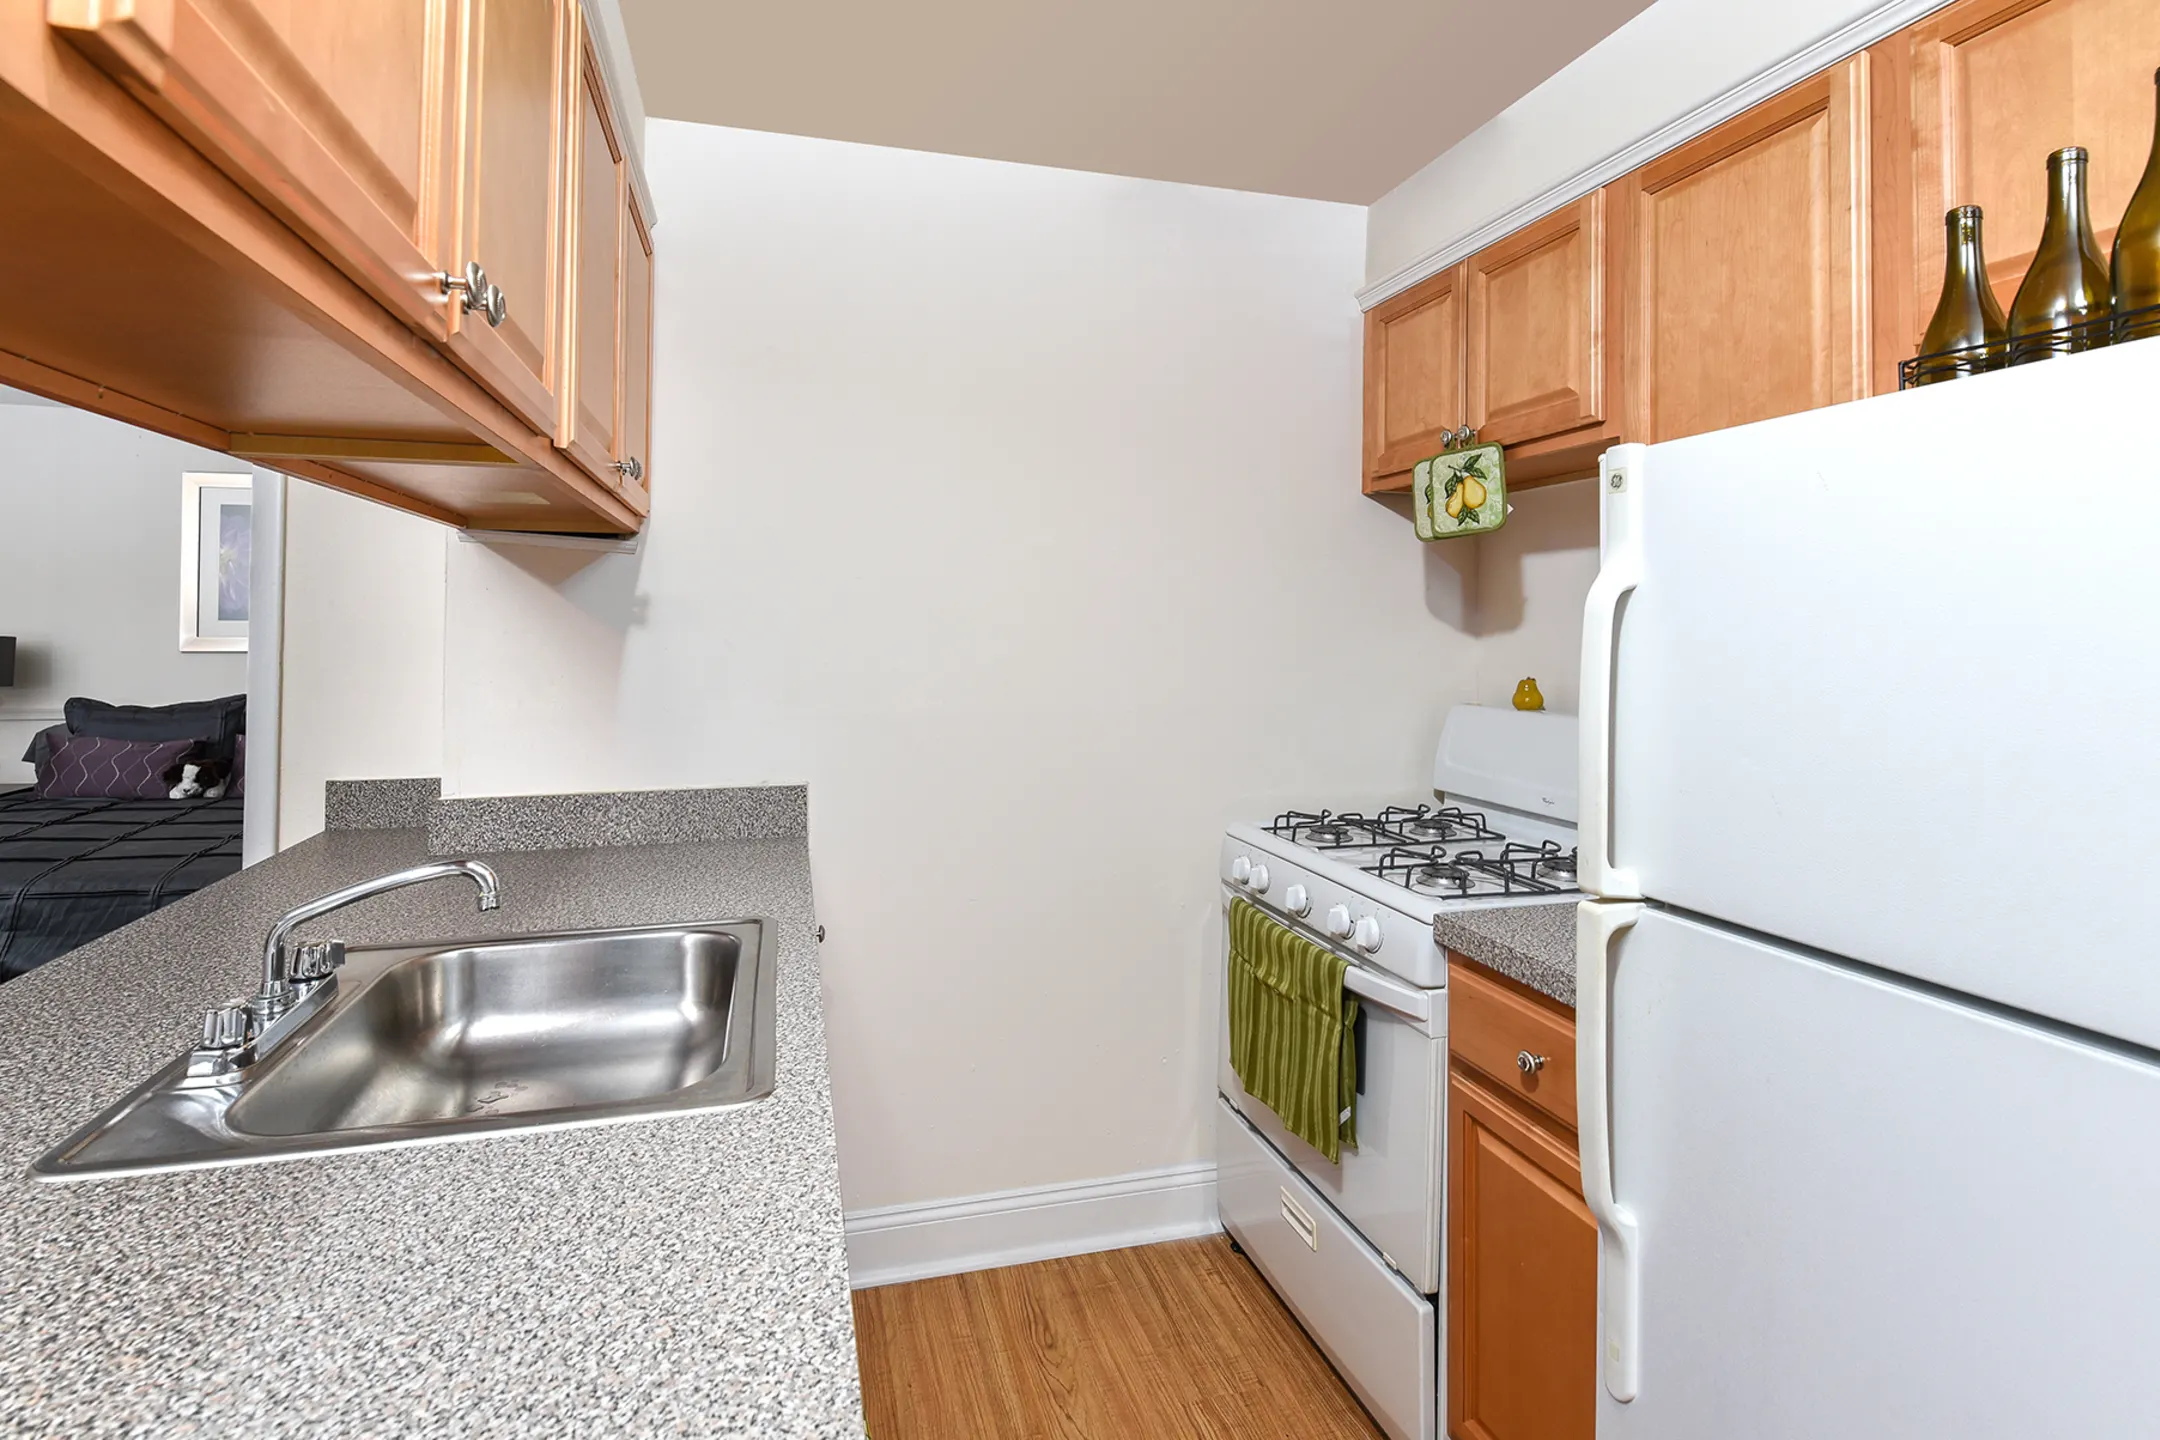 Kitchen - Cramer Hill Apartments & Townhomes - Camden, NJ